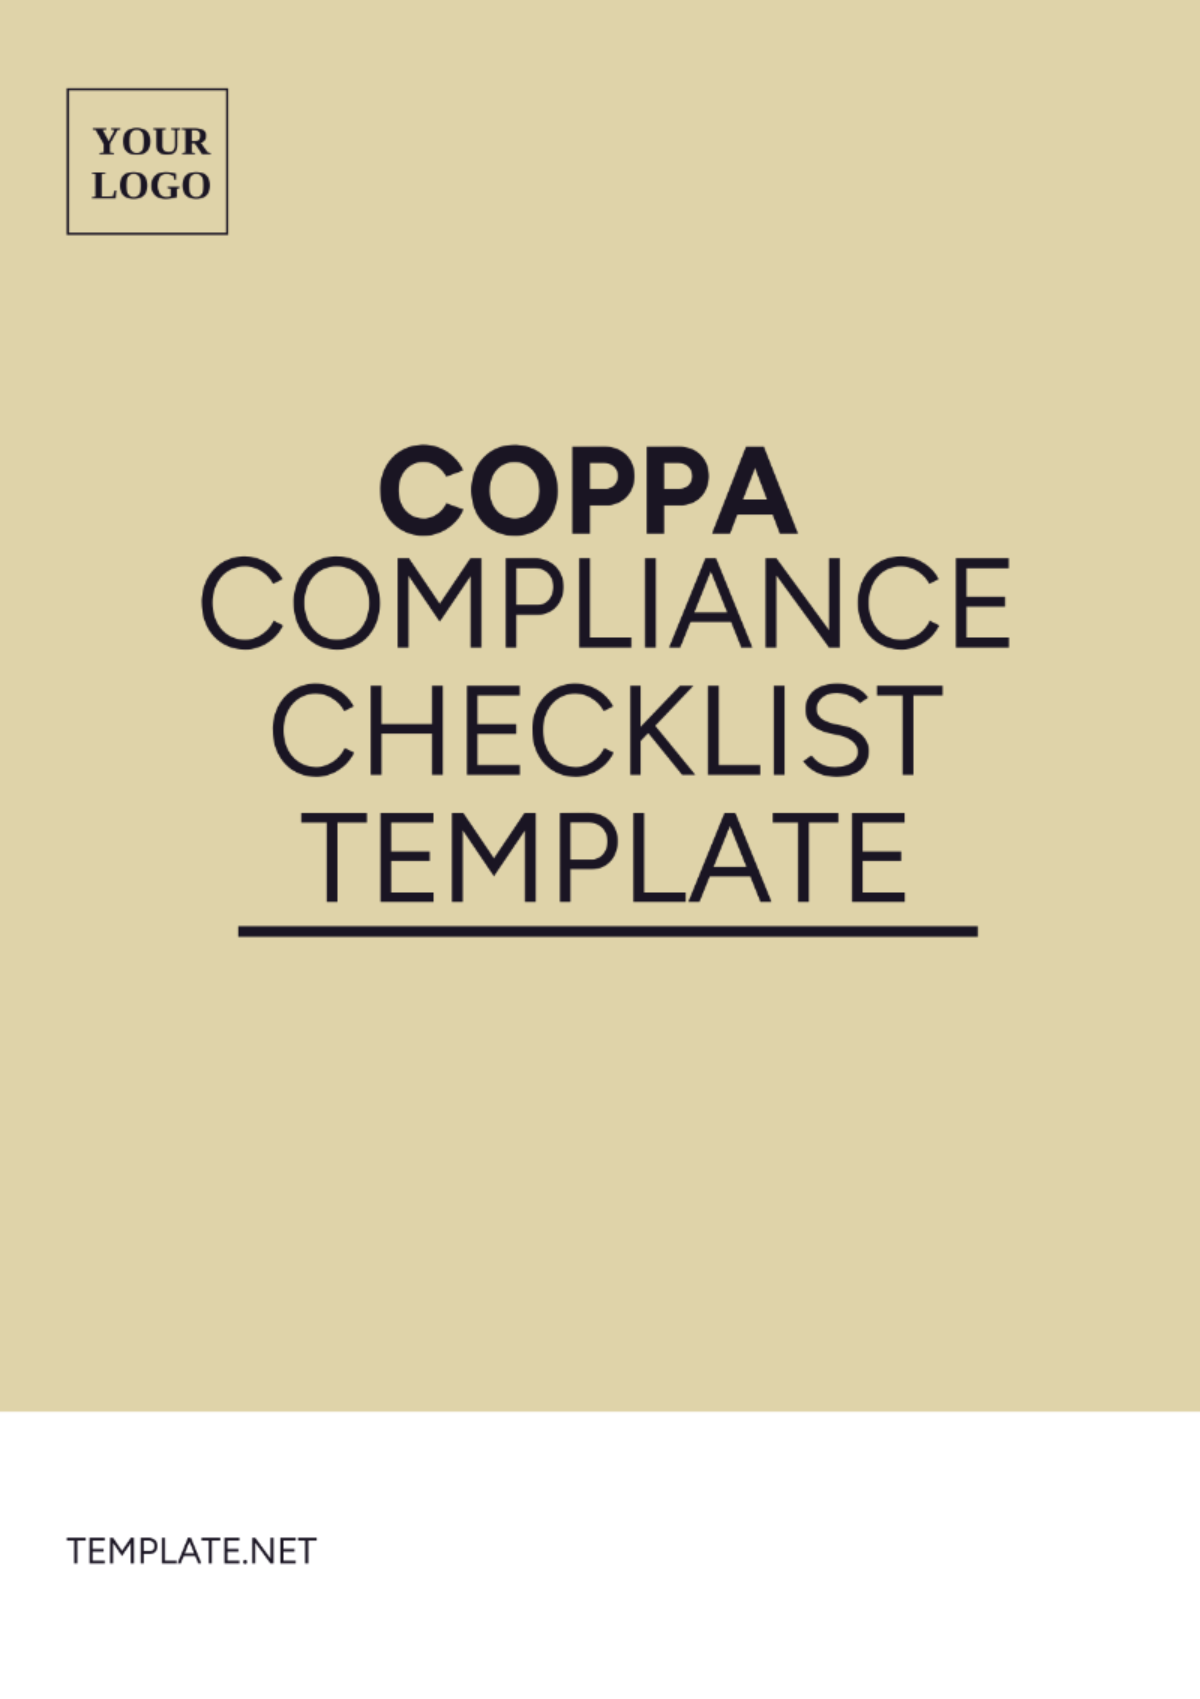 Digital Marketing Agency Coppa Compliance Statement Template